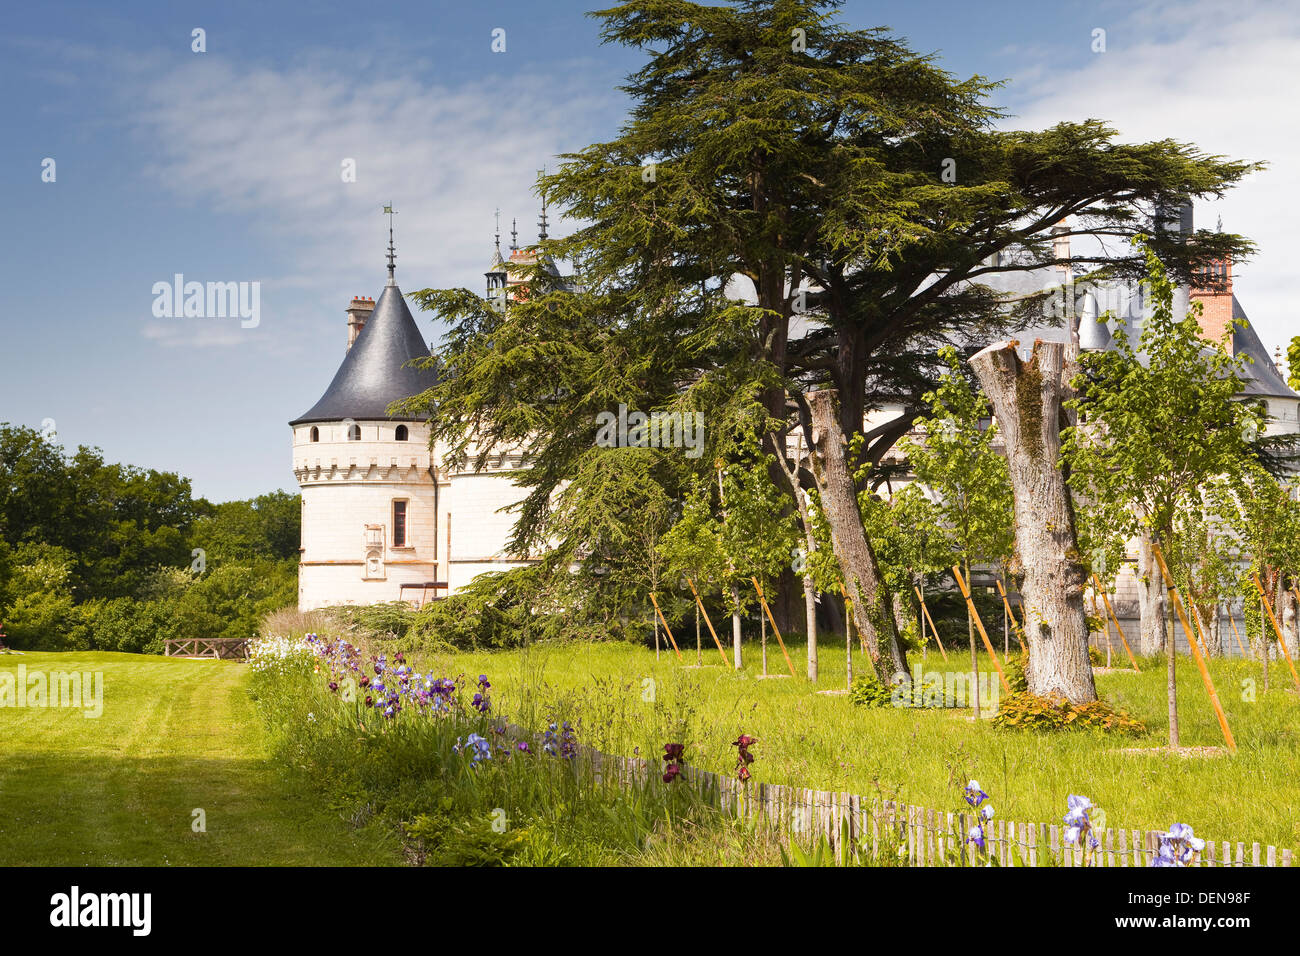 The renaissance chateau at Chaumont-sur-Loire in France. Stock Photo